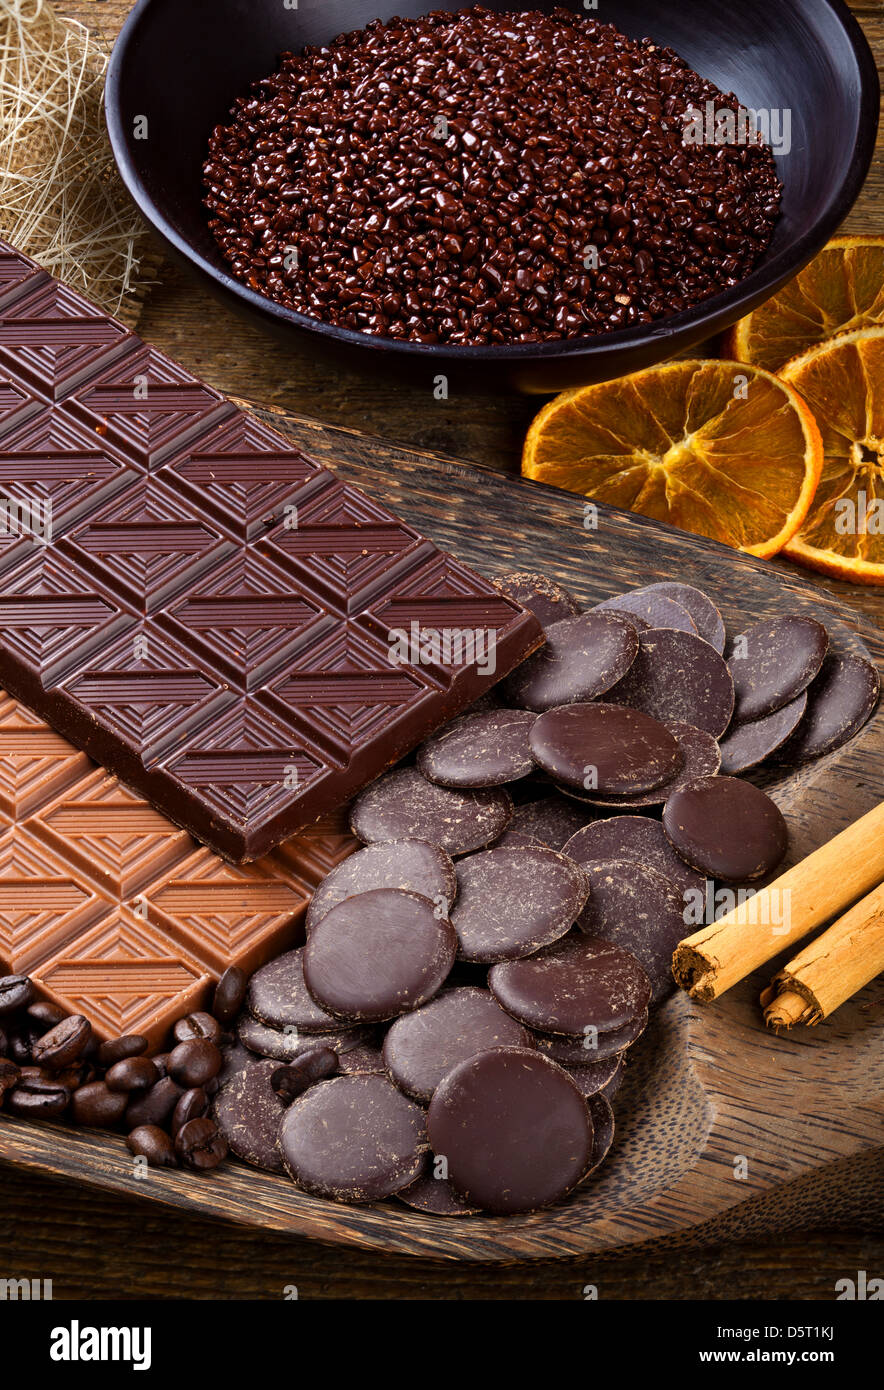 Chocolate with sliced dried orange and cinnamon sticks. Stock Photo